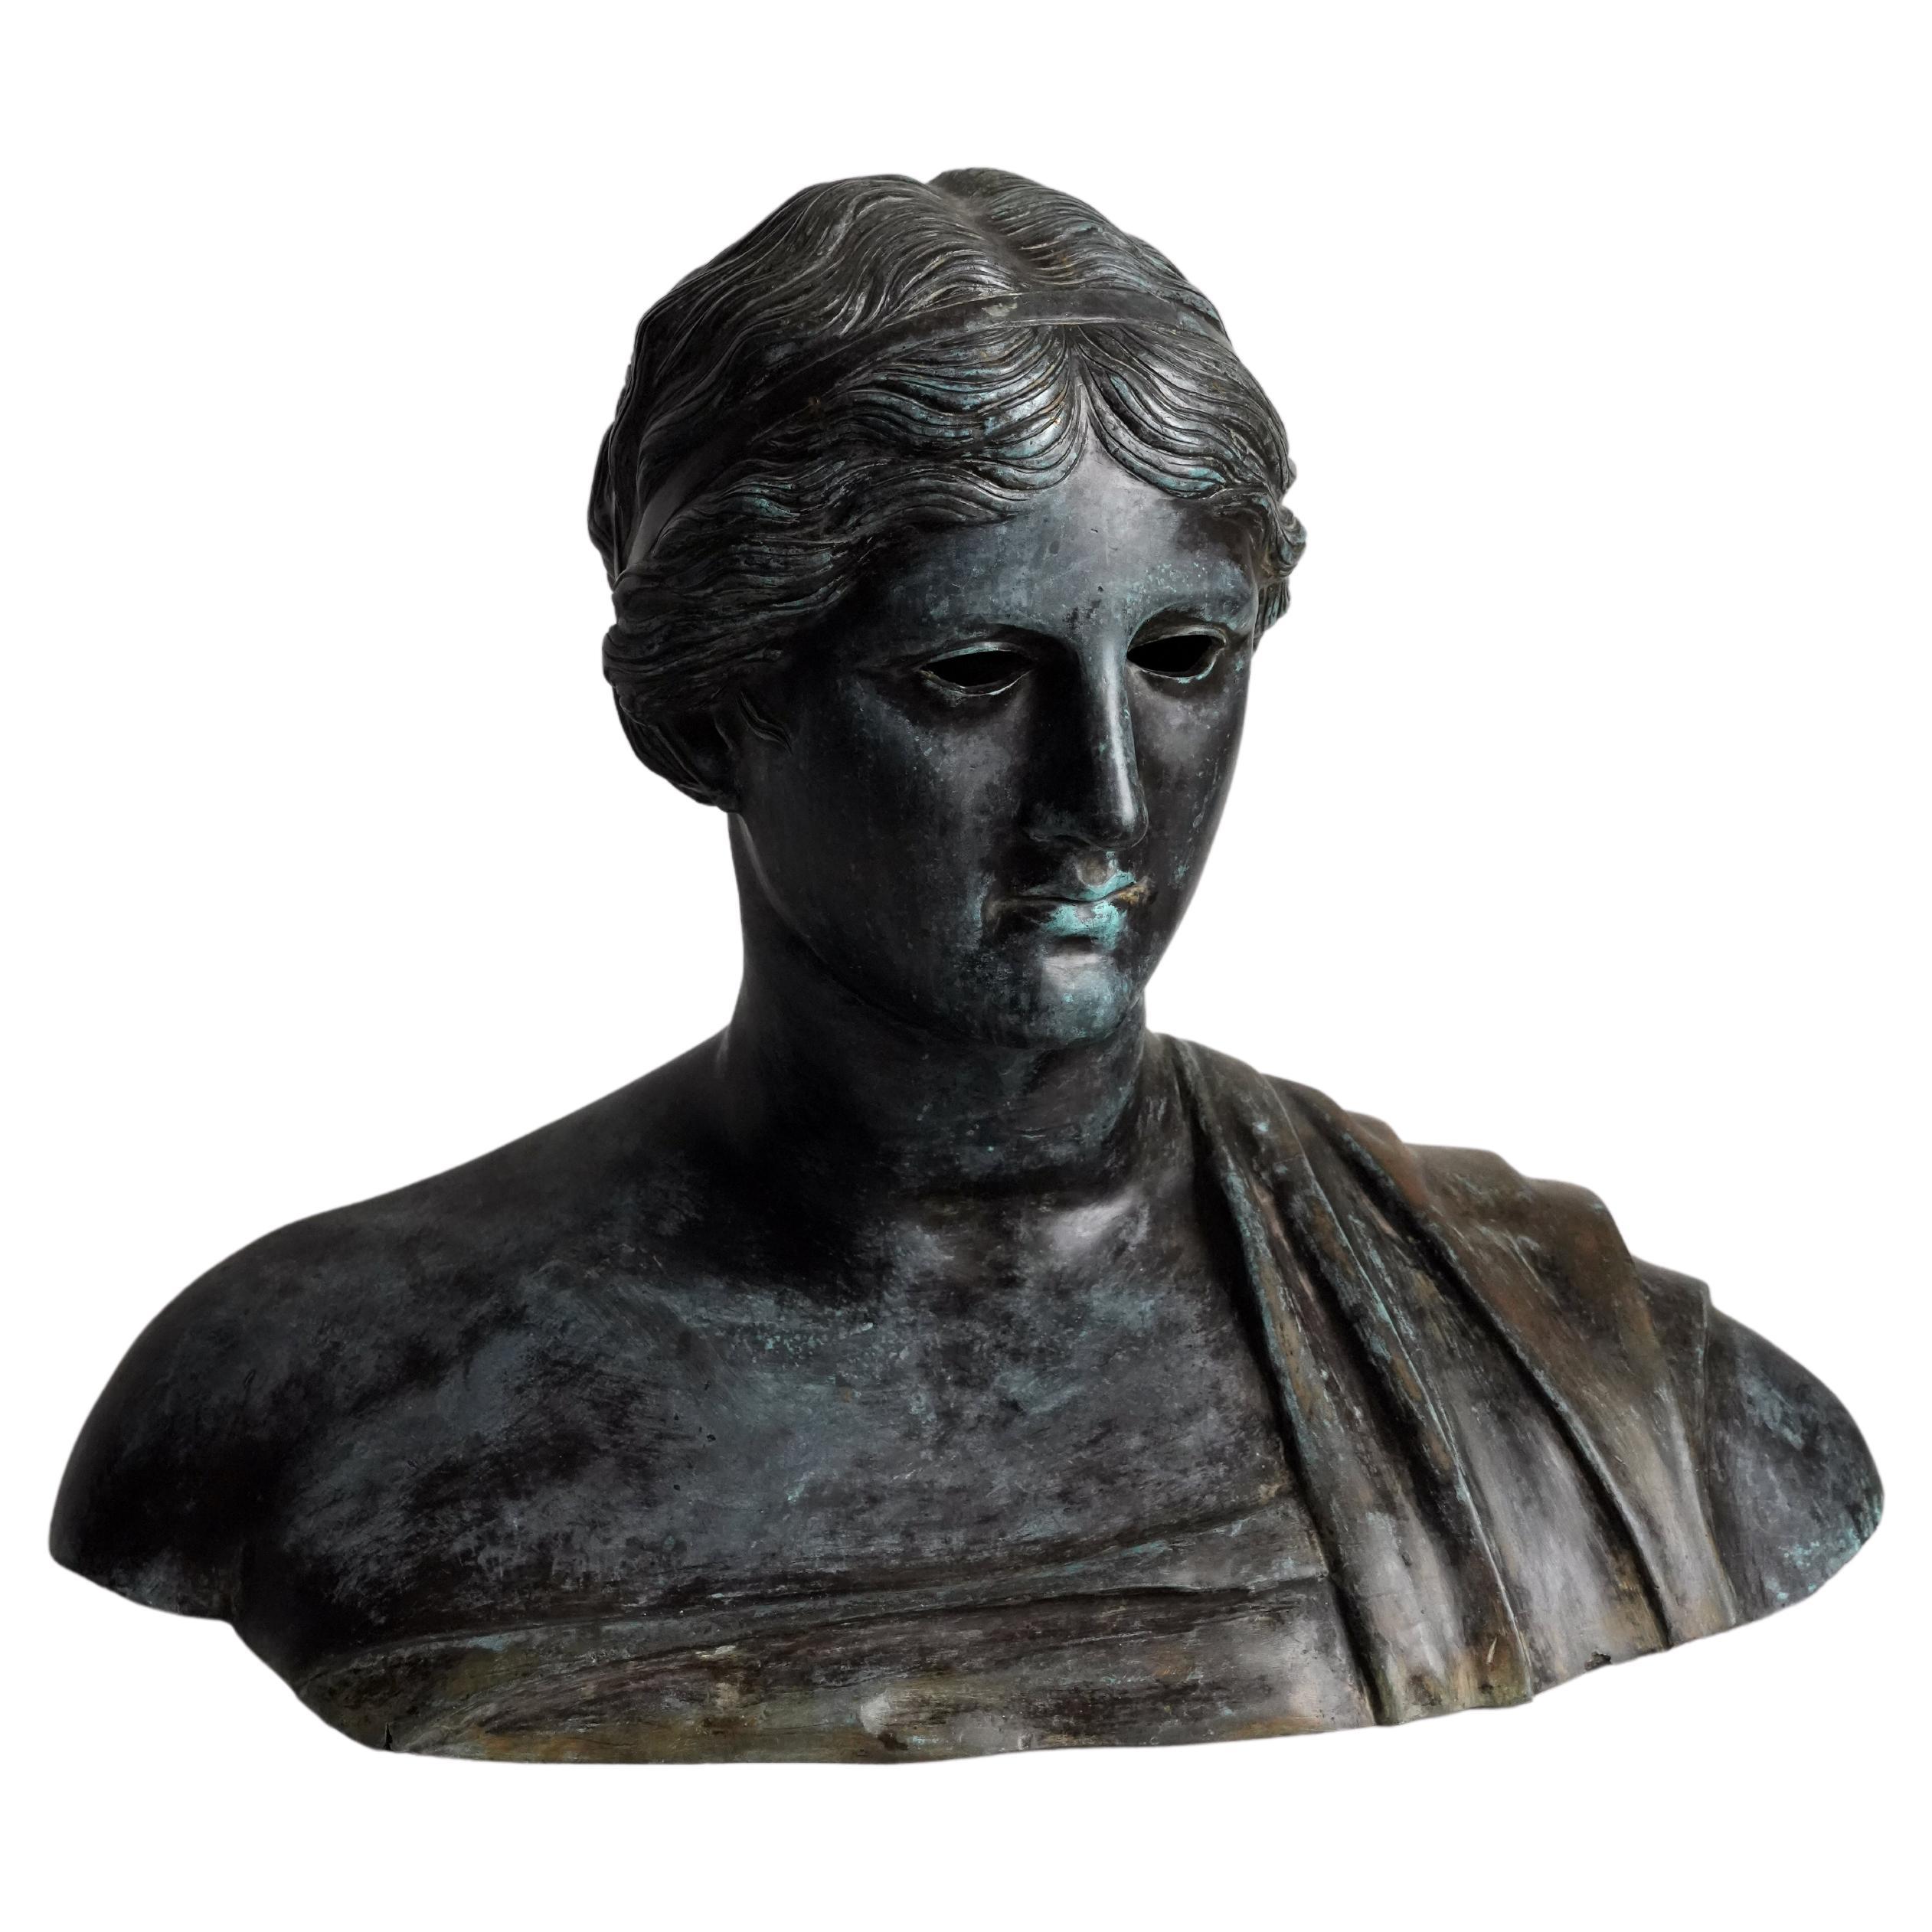 Grand Tour Bronze Bust of a Woman